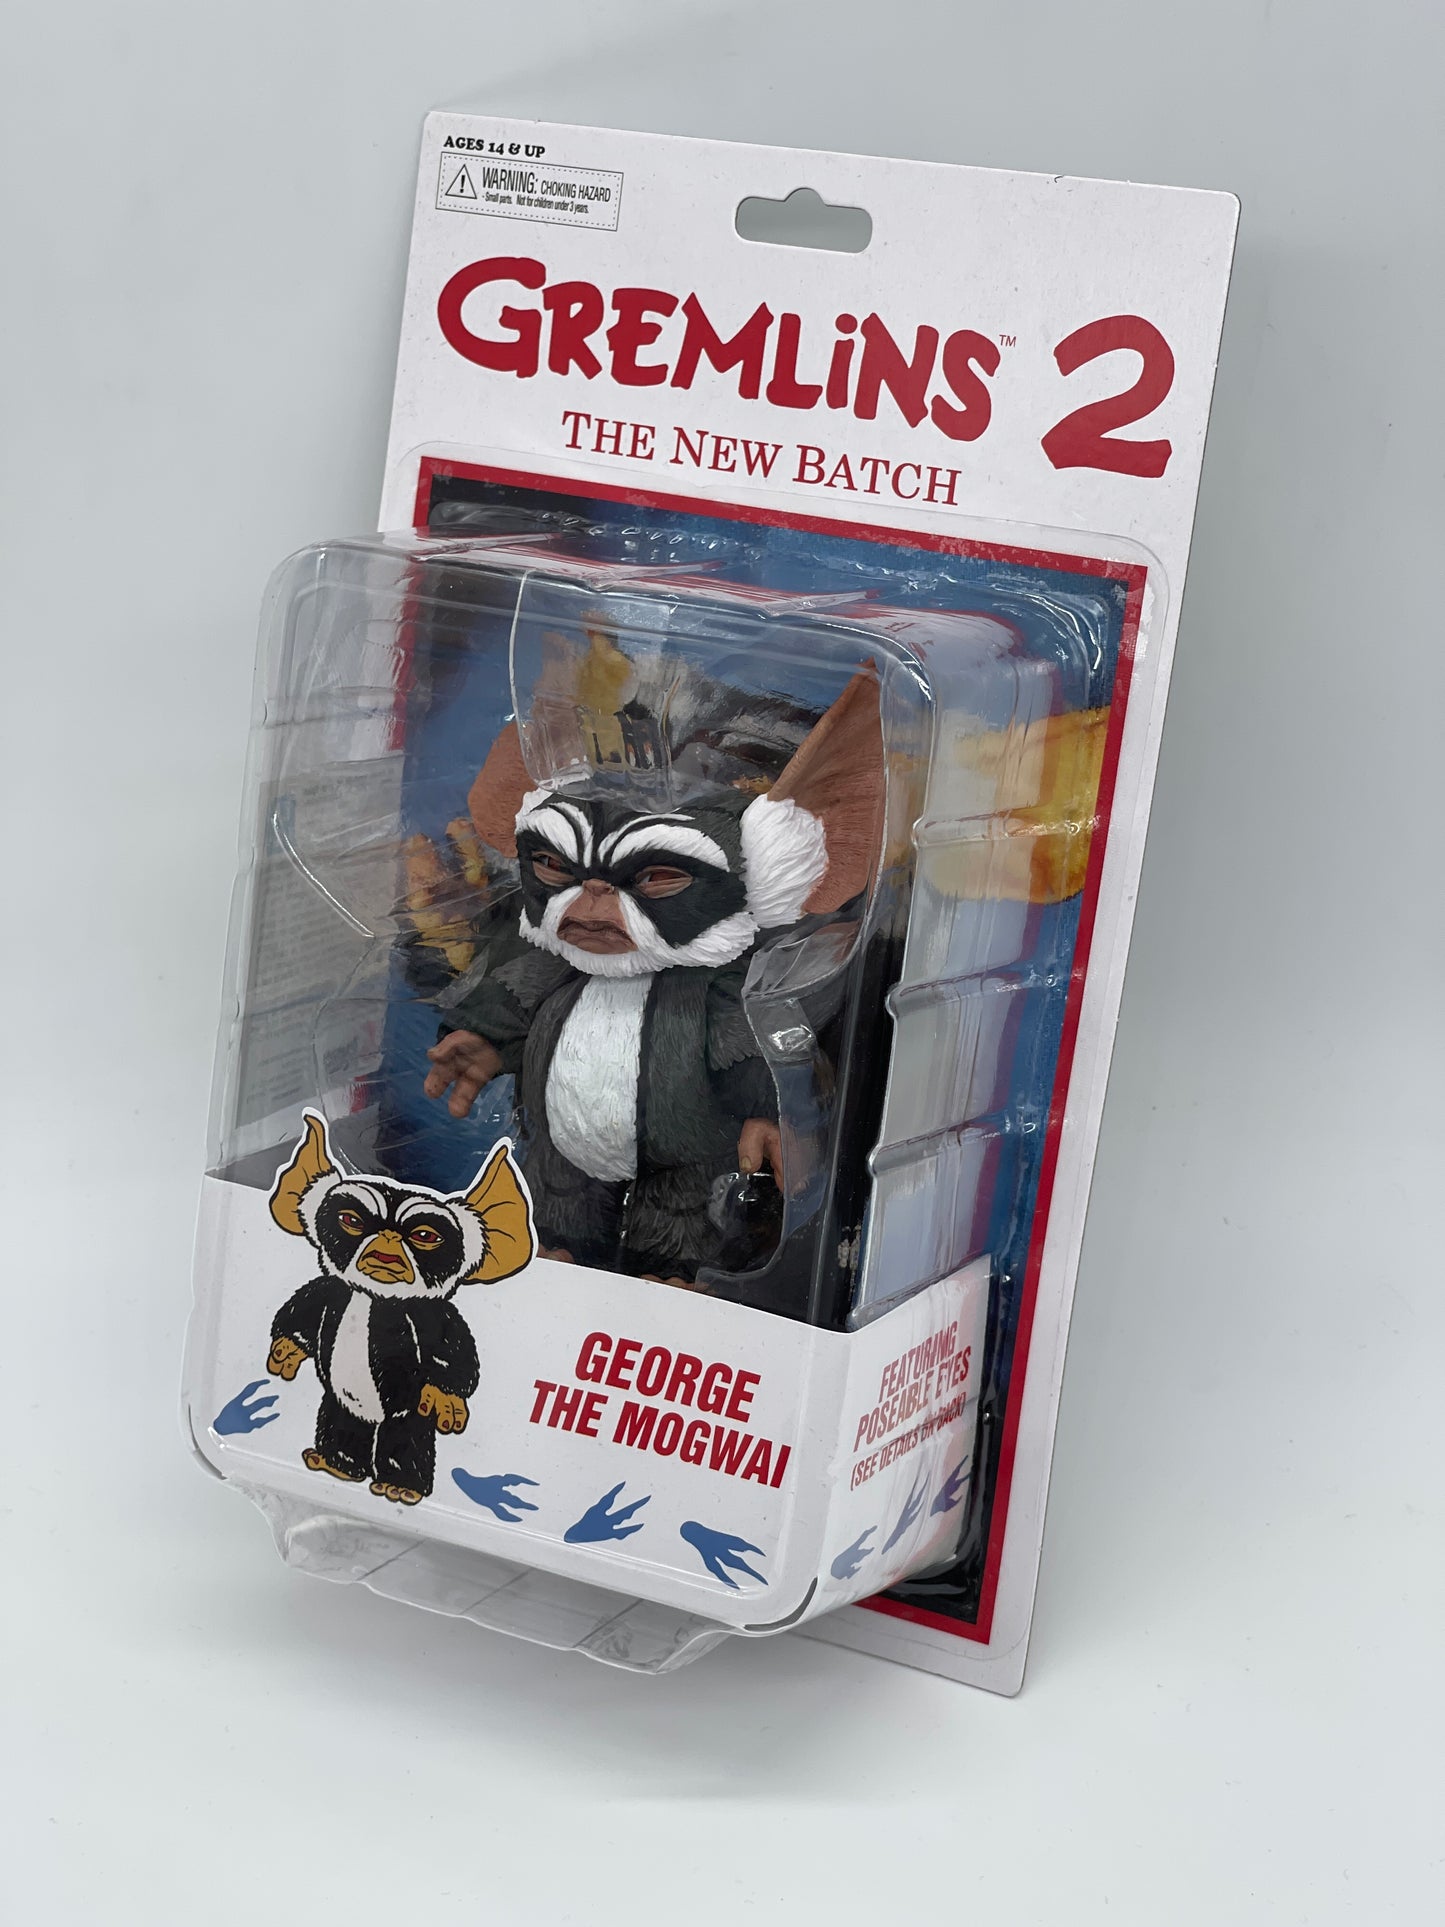 Gremlins 2 "George The Mogwai" The New Batch Actionfigur Neca #04 (2023)